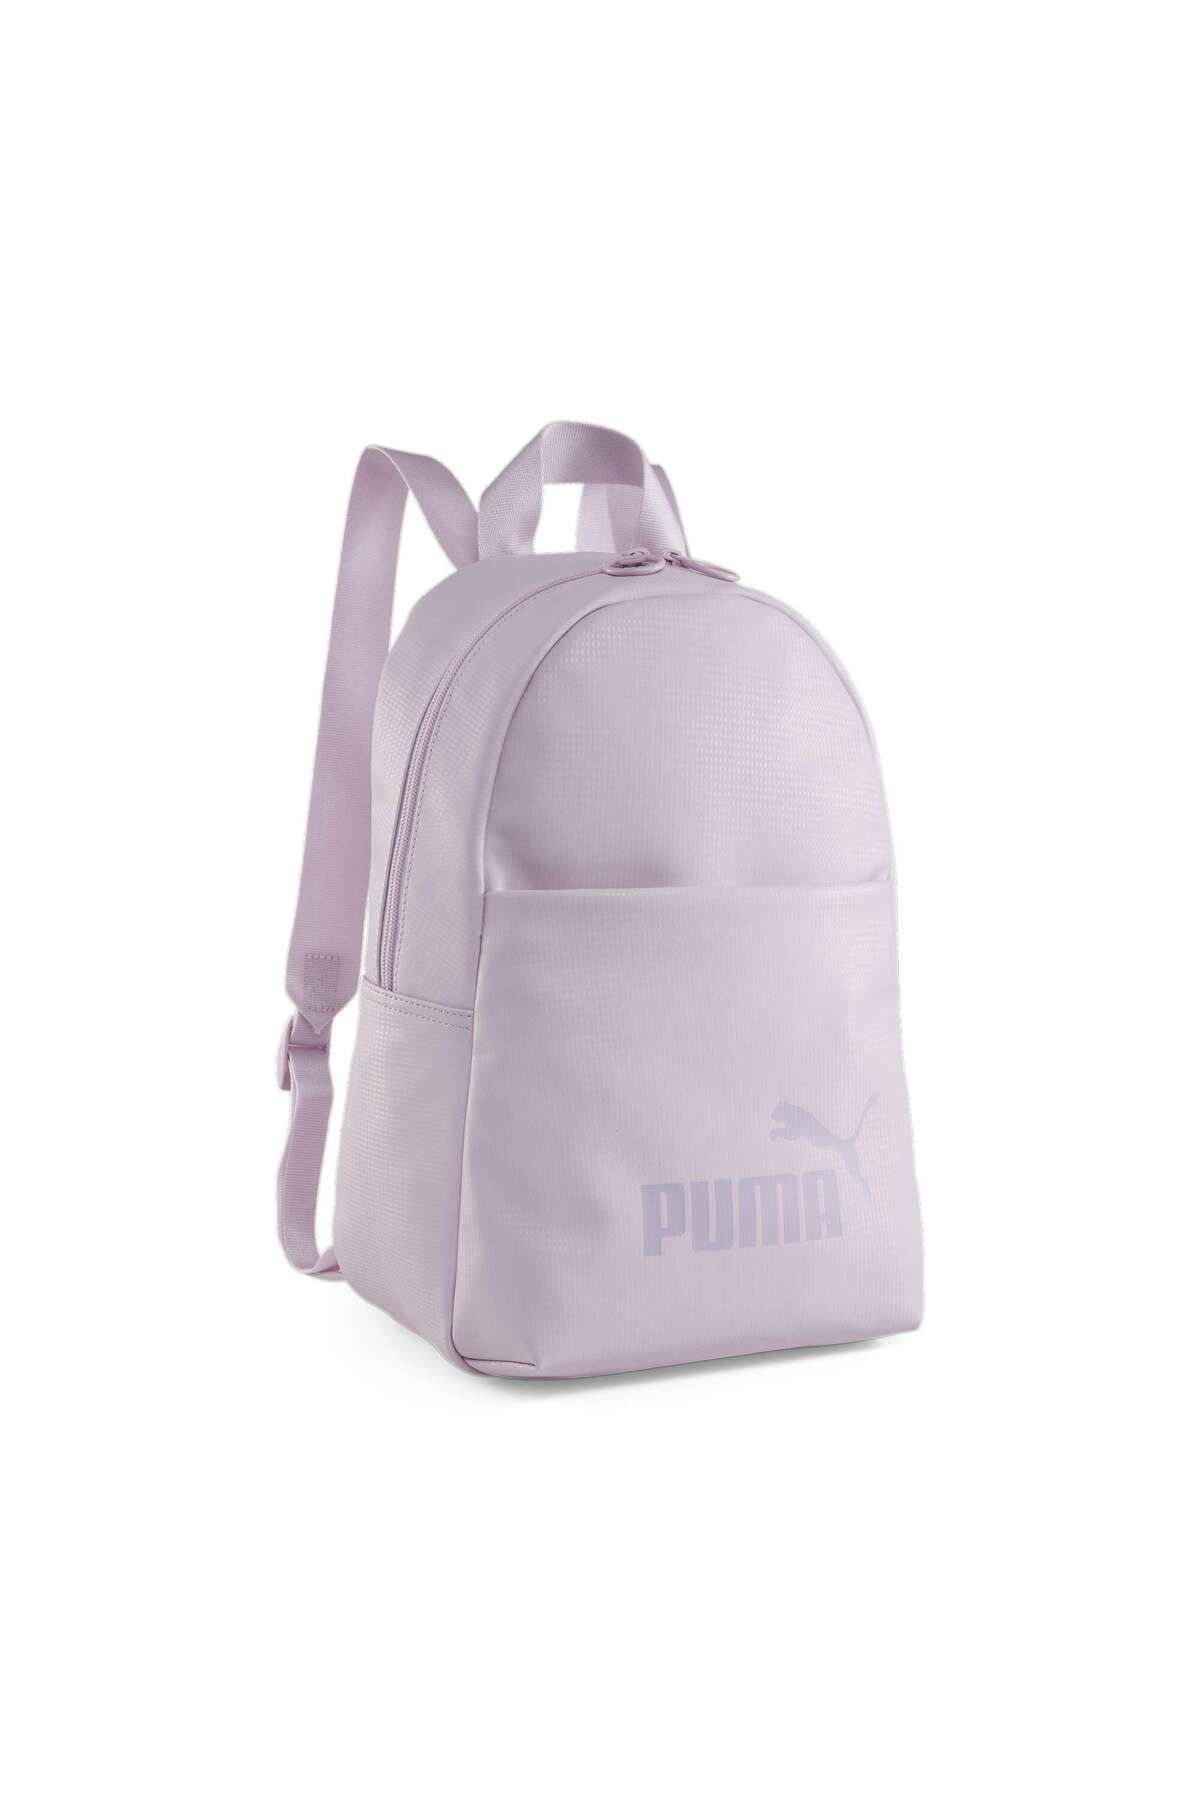 Puma Core Up Backpack09027602